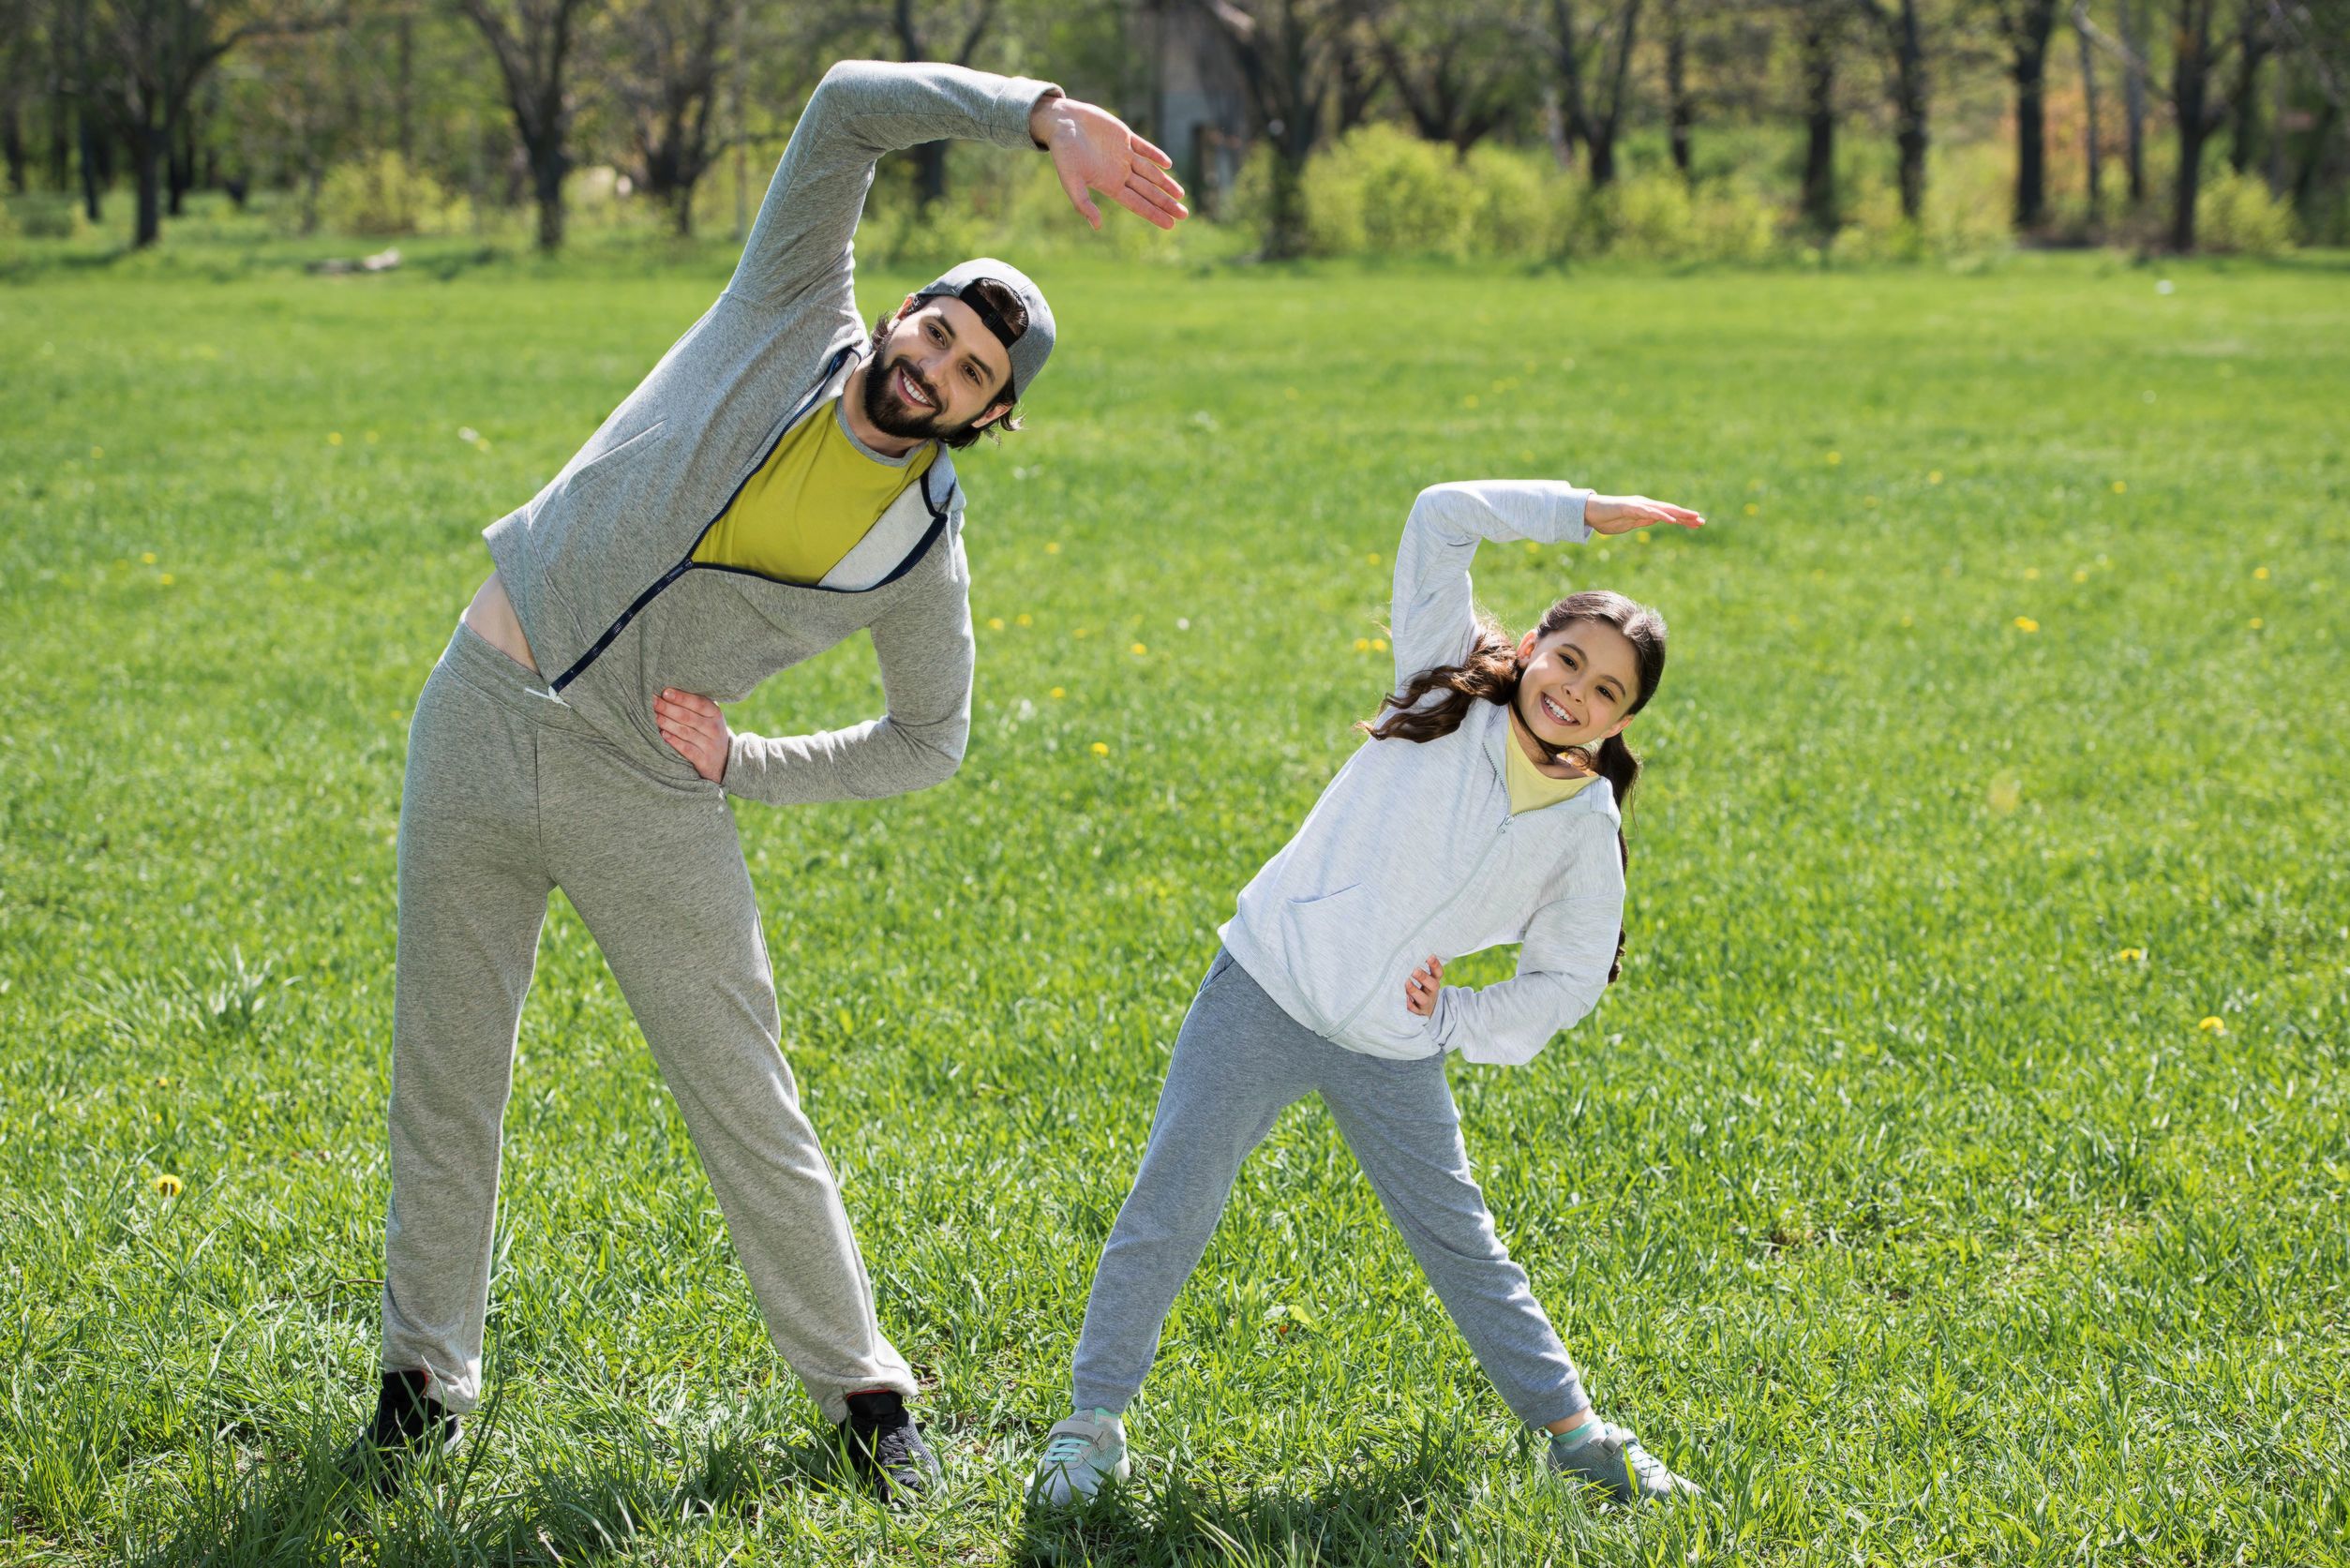 Anti “Mager”, Ini 8 Cara agar Anak Suka Olahraga!